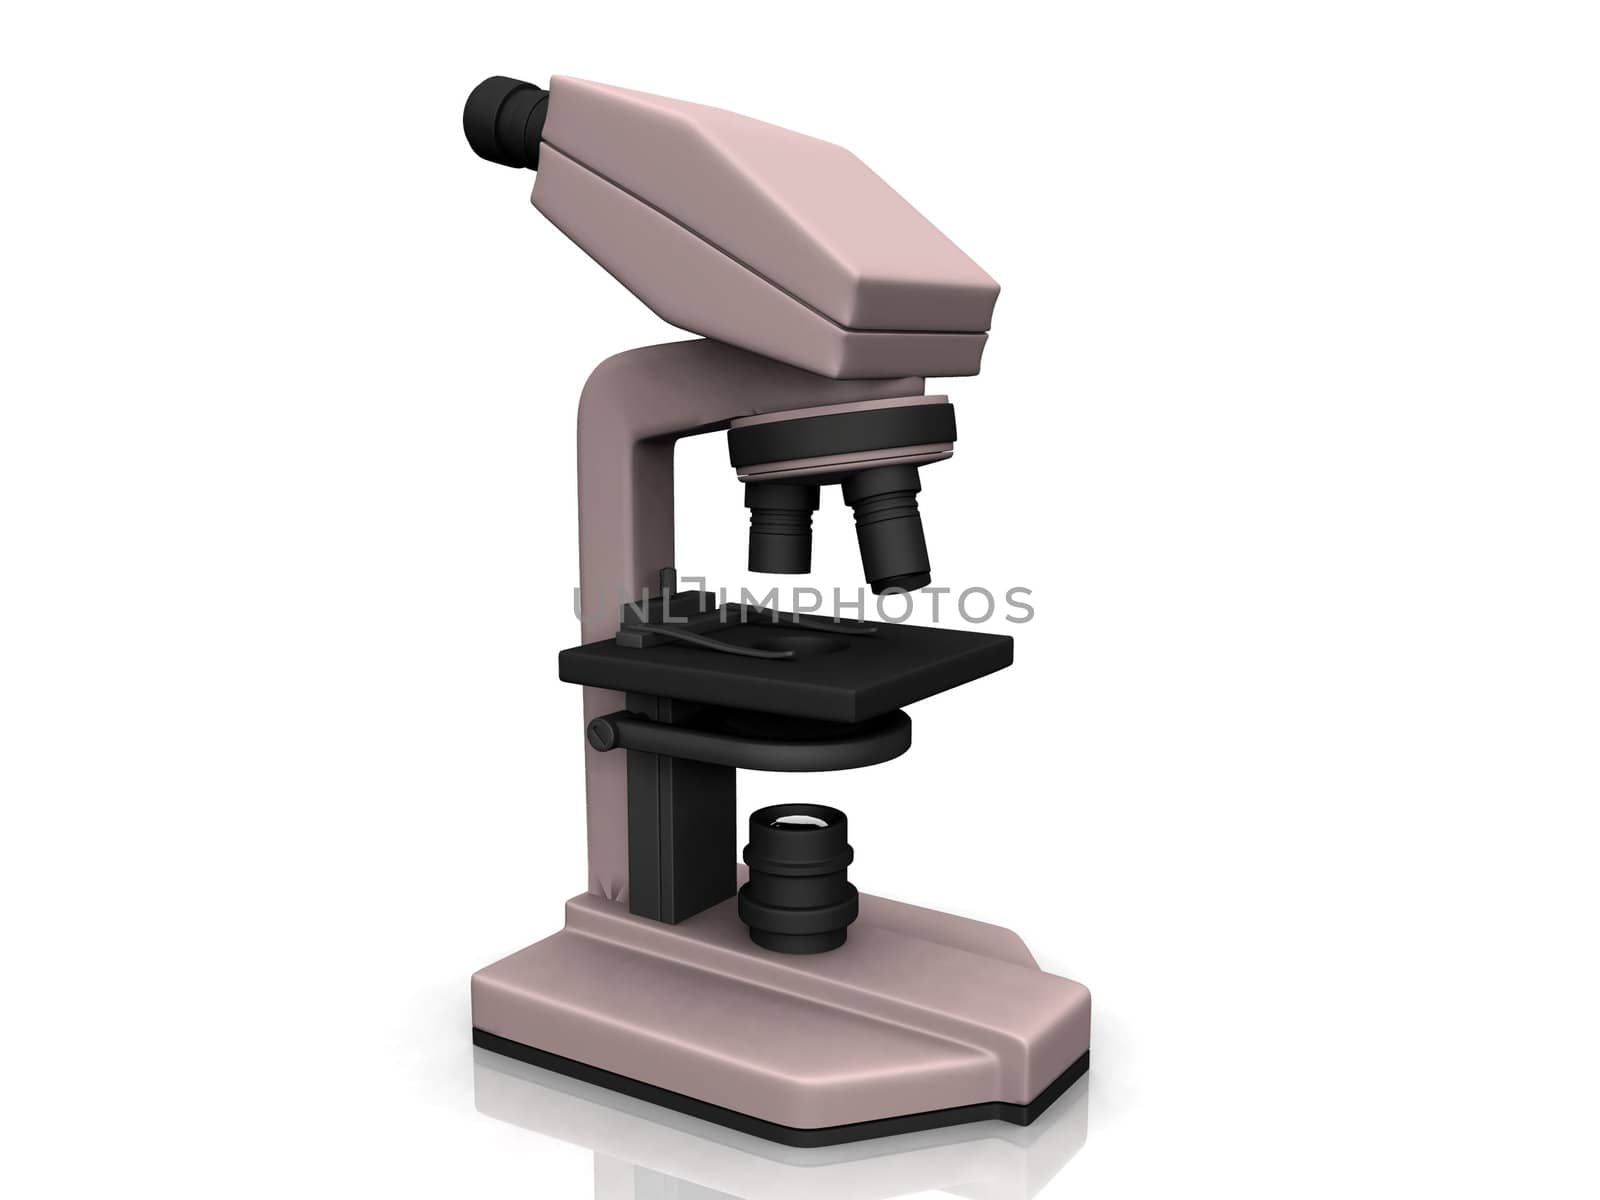 the microscope